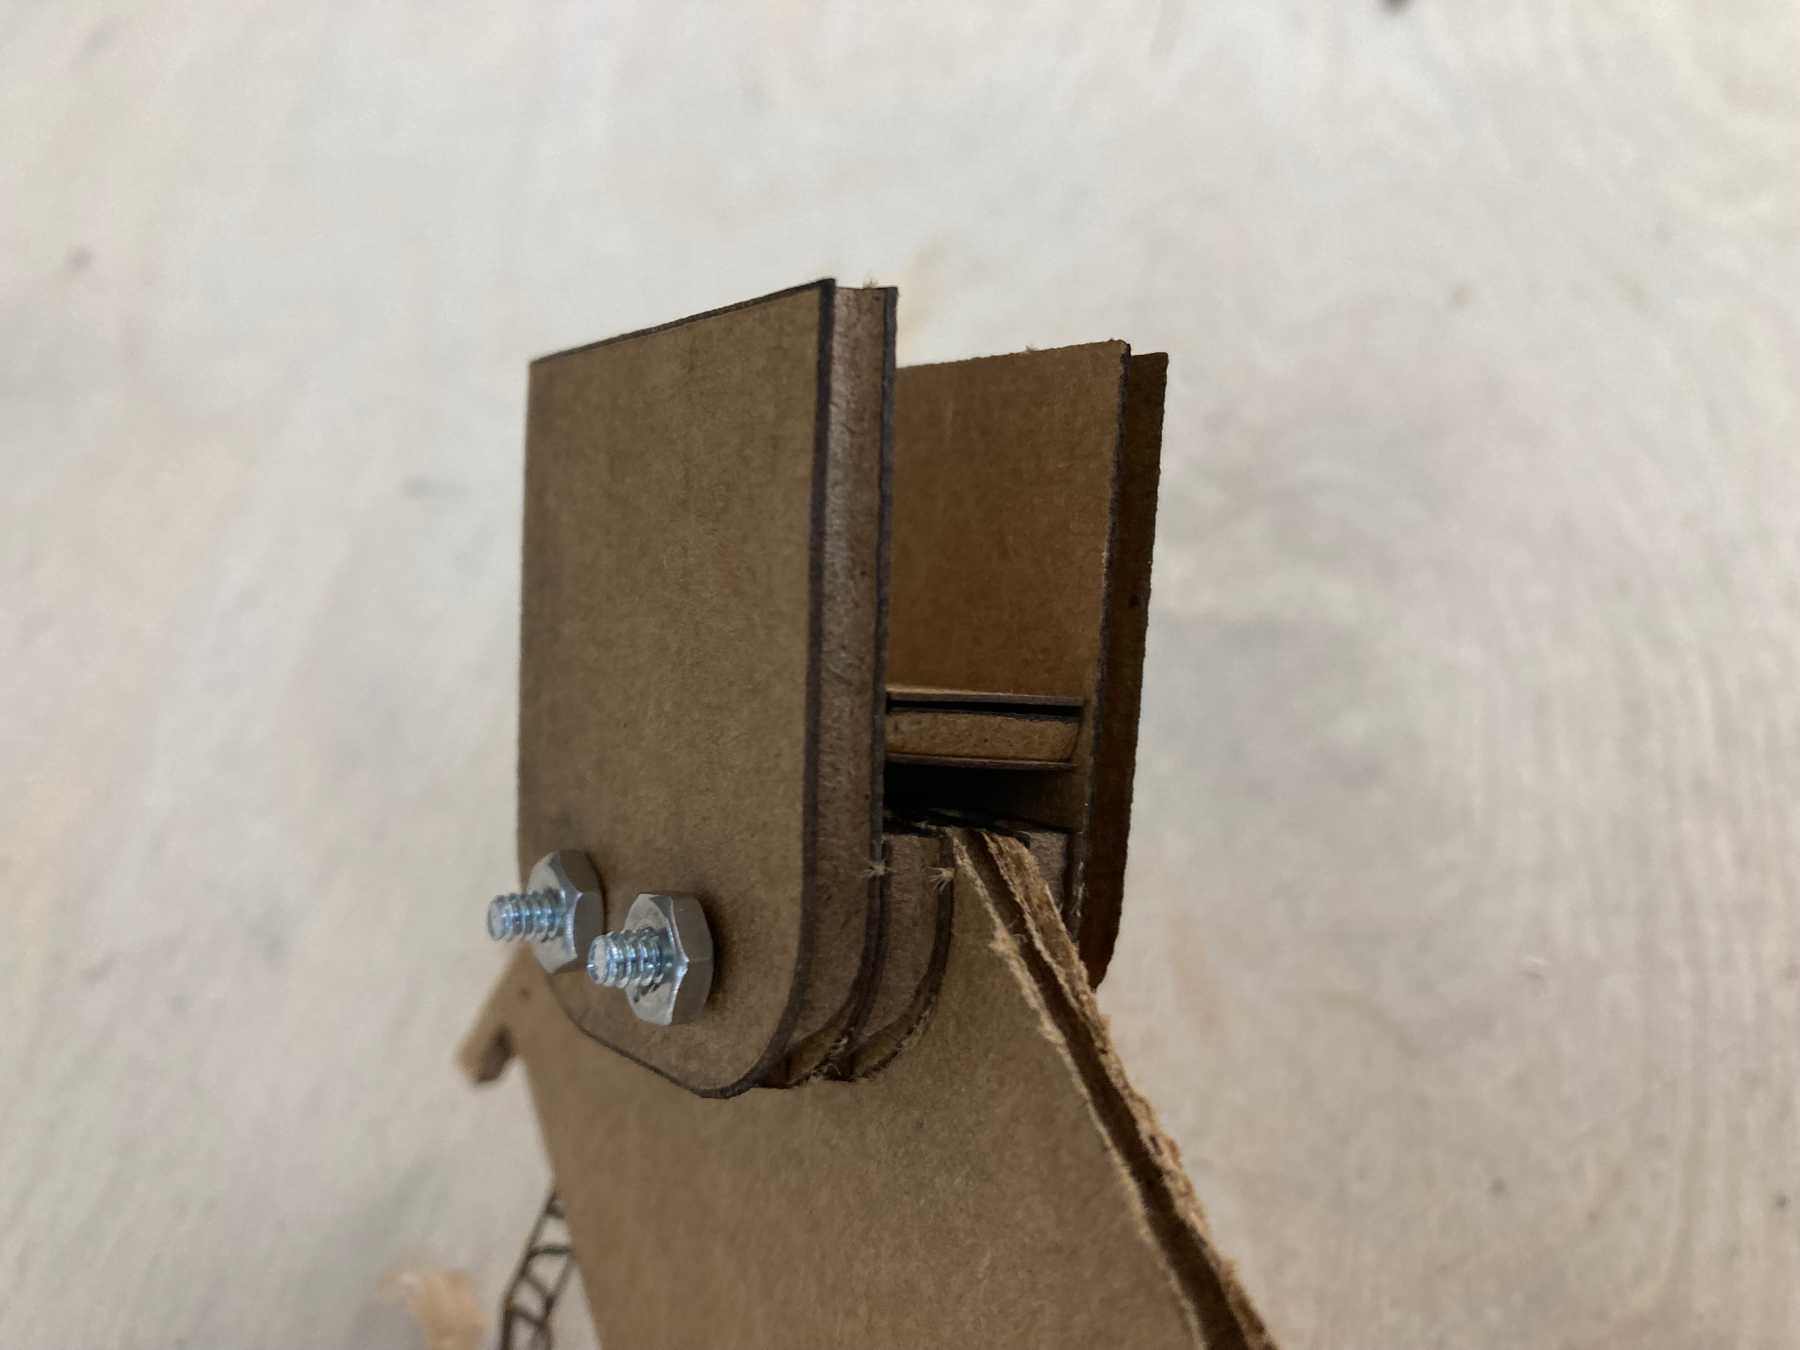 Cardboard enclosure prototype